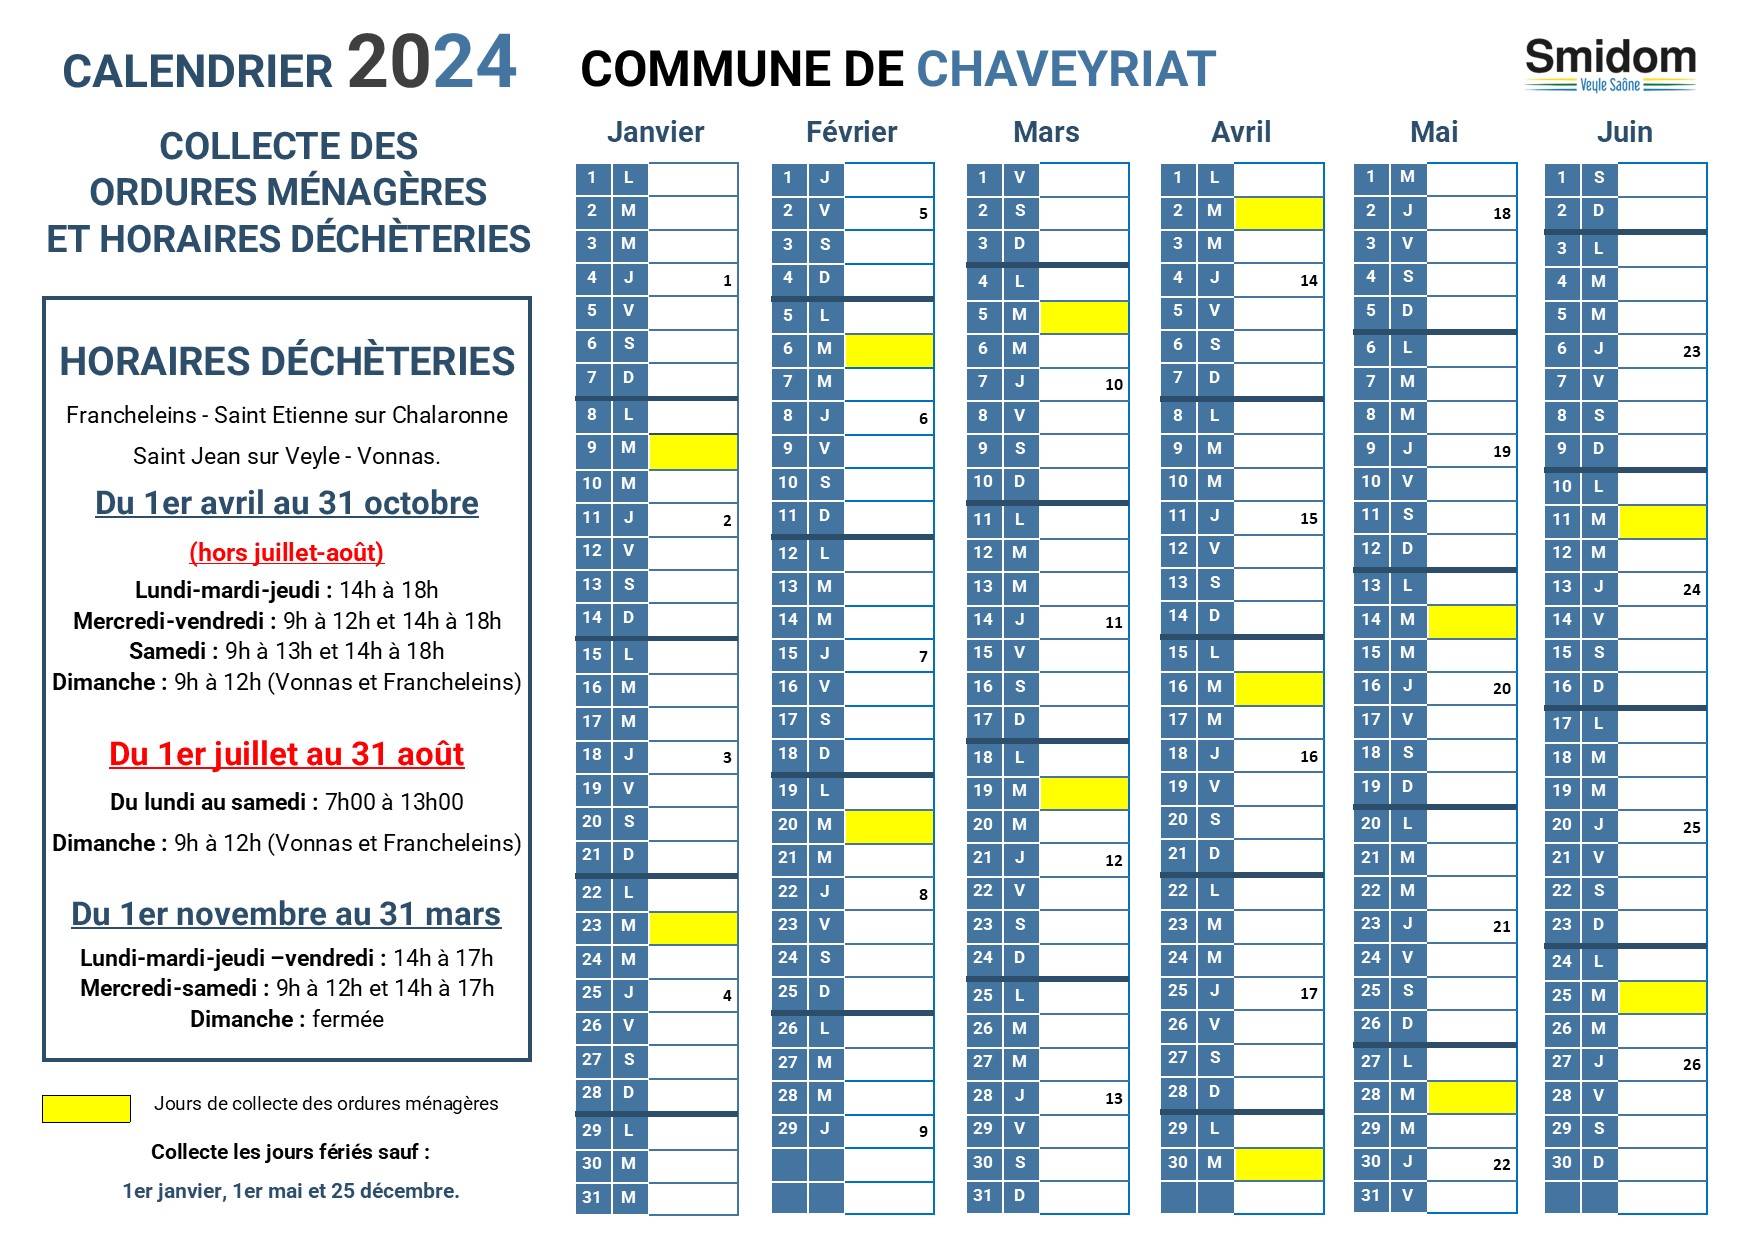 CHAVEYRIAT - Calendrier 2024 - 1.jpg